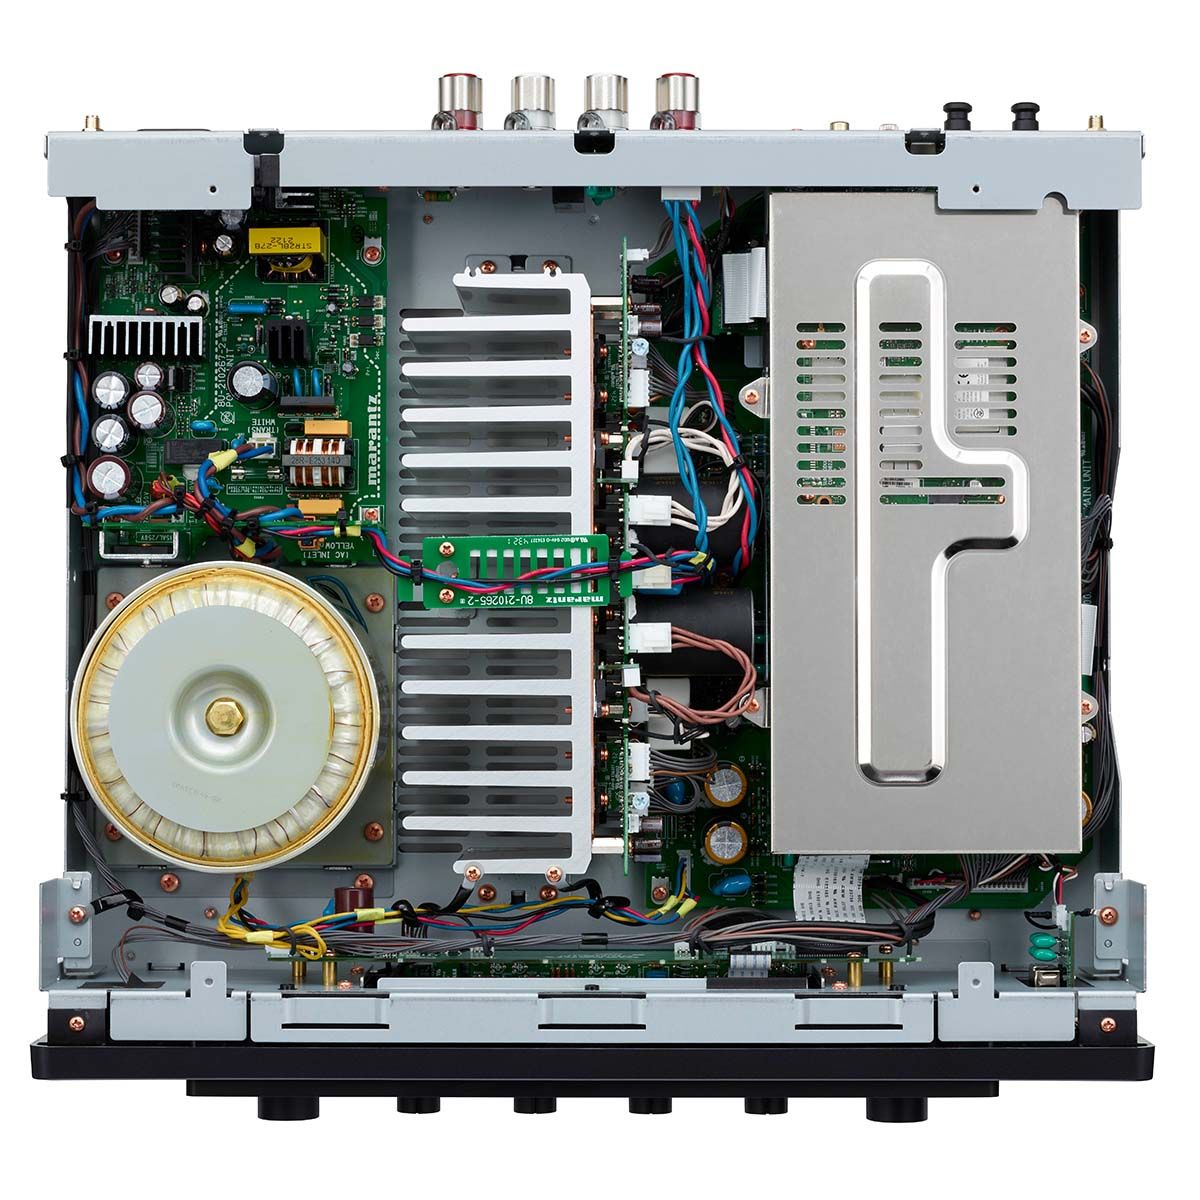 Marantz Model 40n Integrated Amplifier, Black, top view with internals exposed